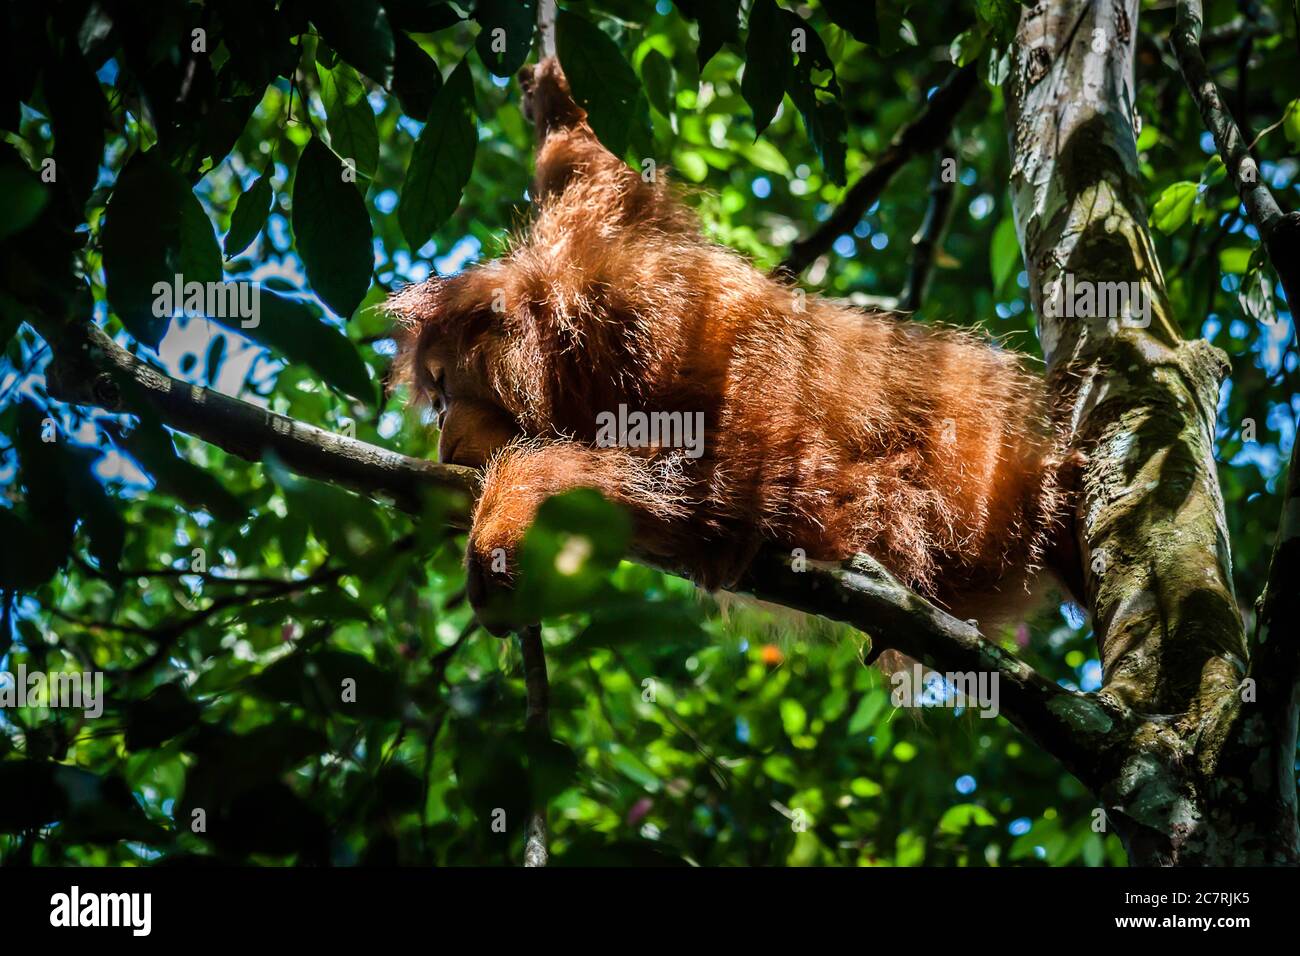 An orangutan in the wild jungle in Sumatra Stock Photo